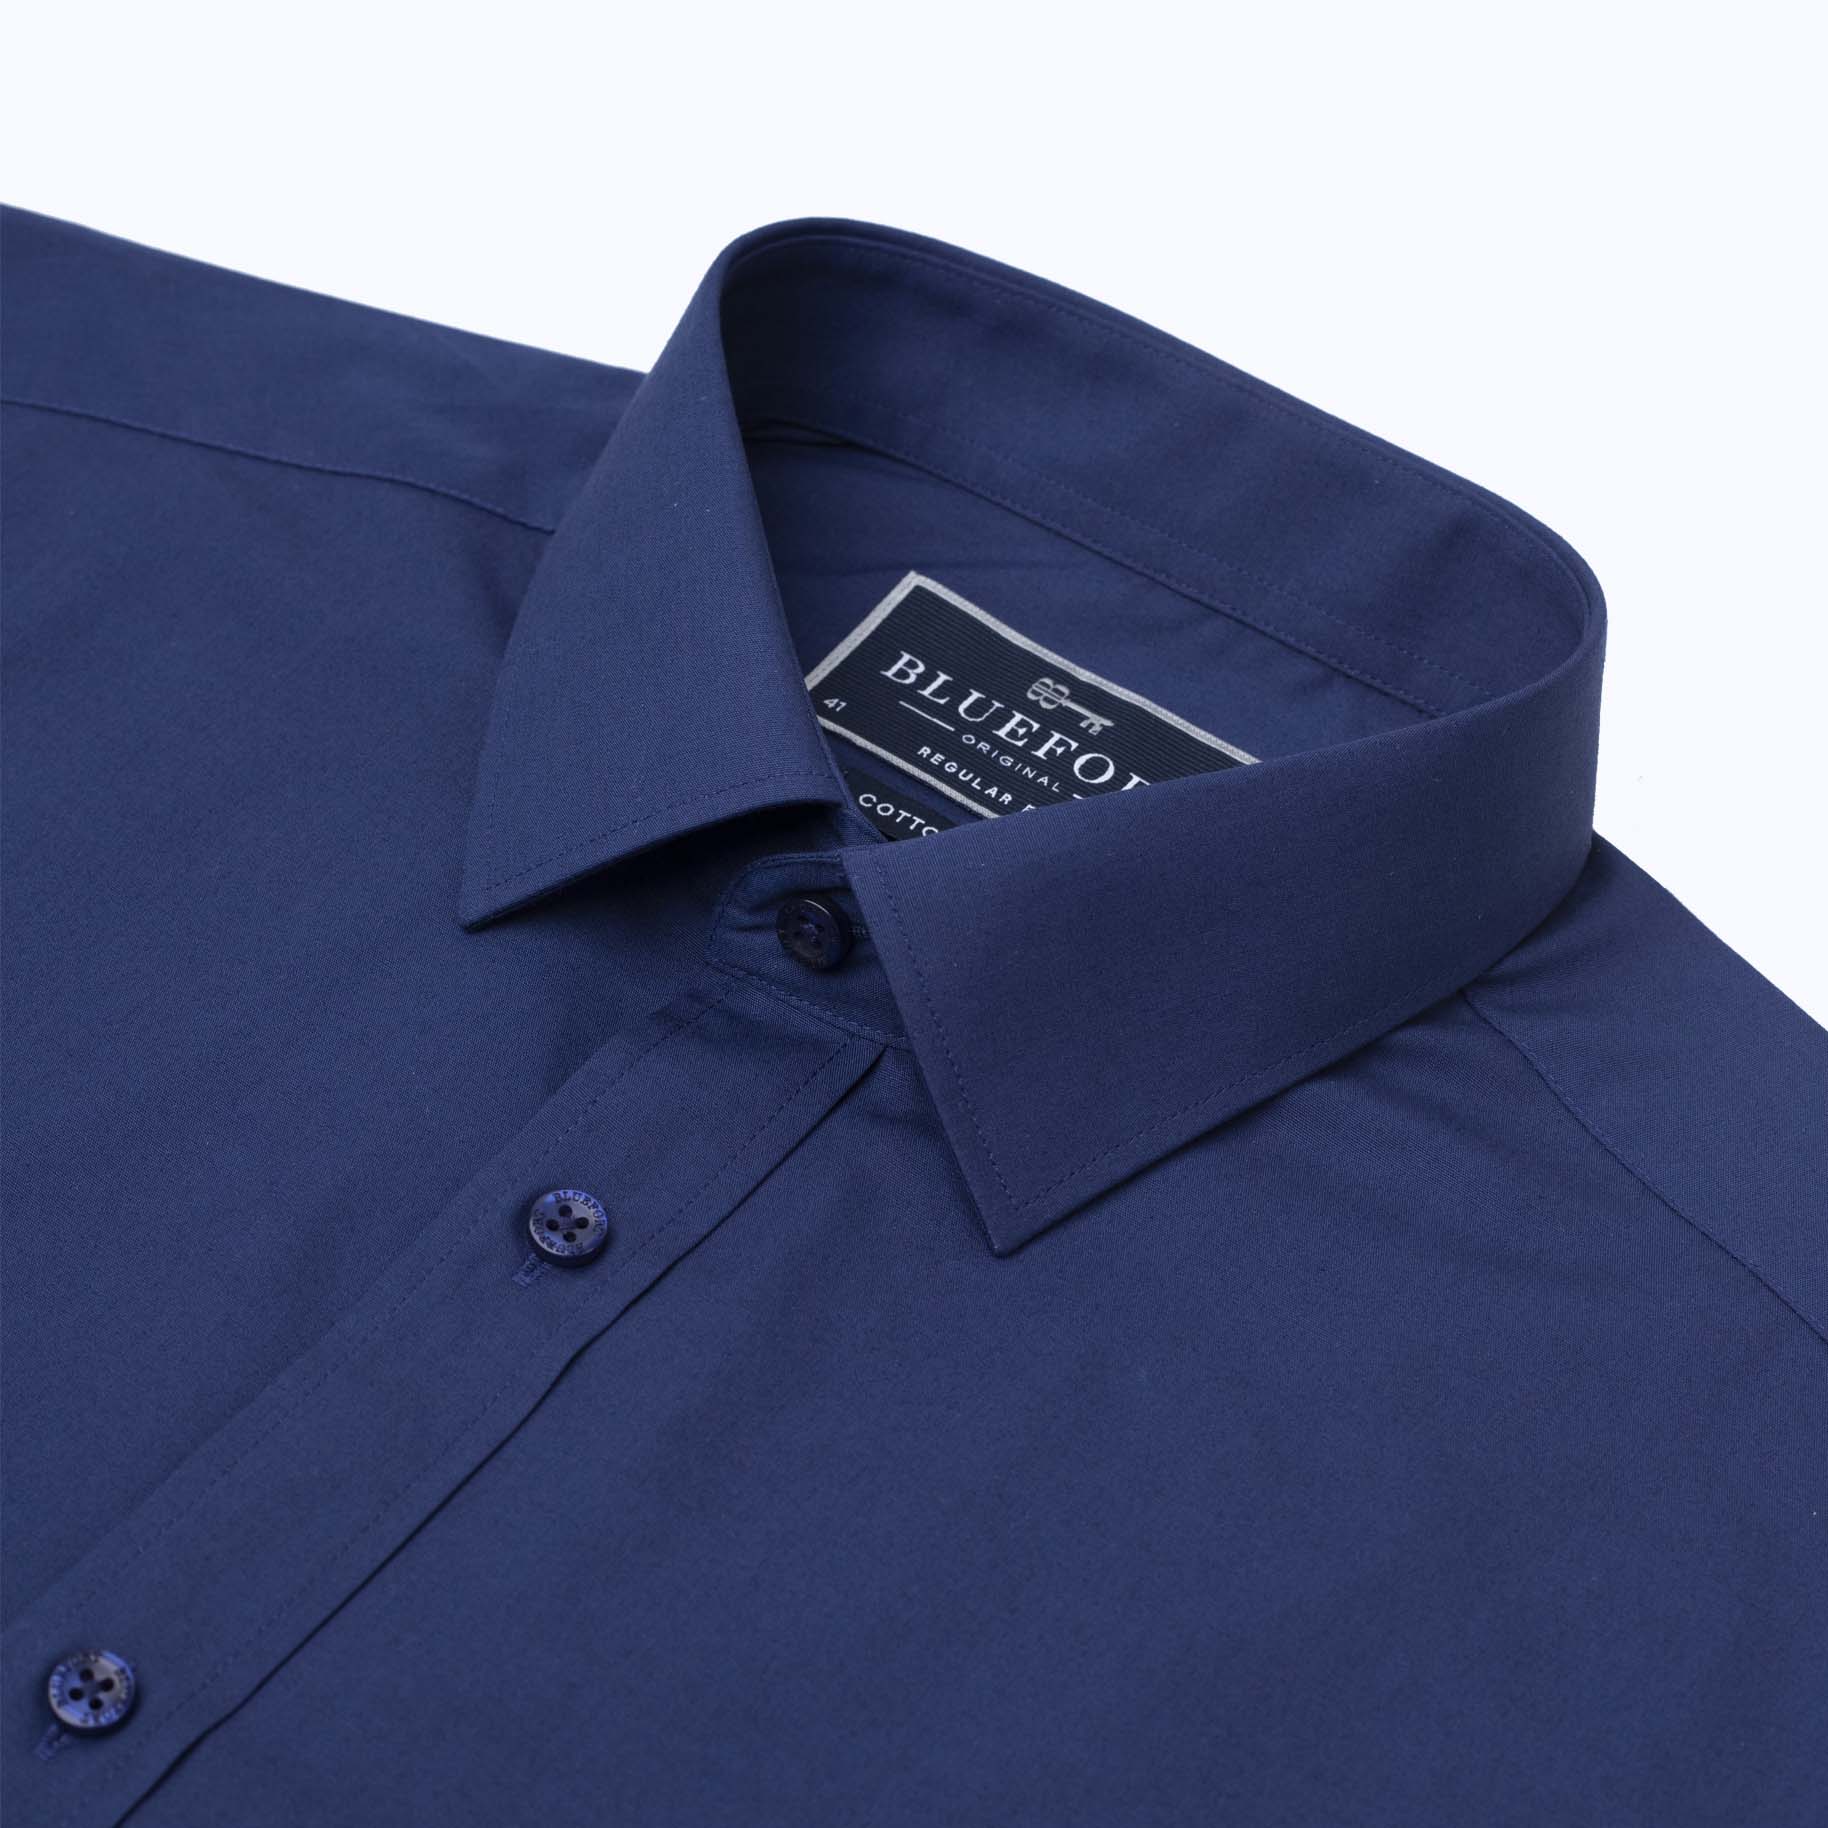 Navy Poplin Shirt - Bluefort